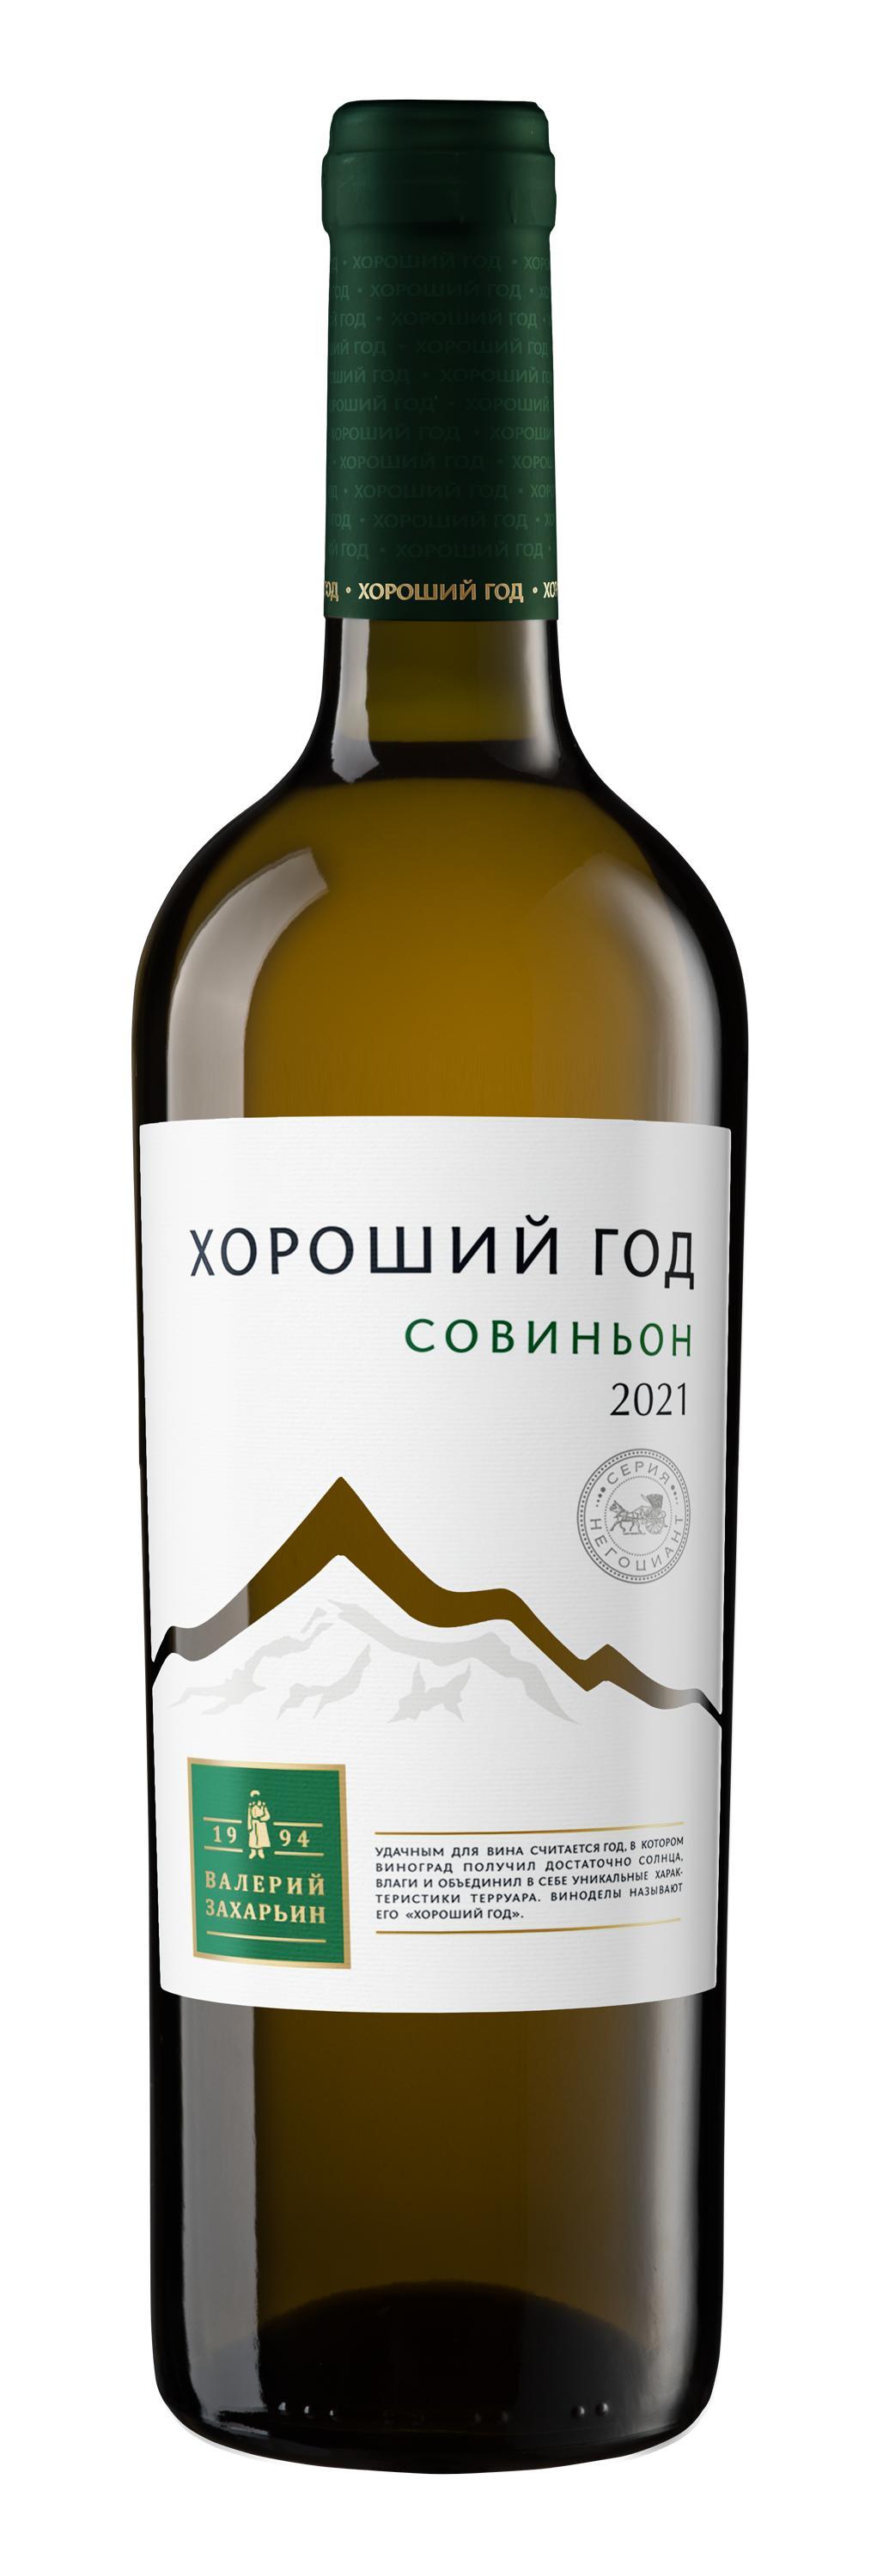 Вино серии «Хороший год» Совиньон белое сухое 750мл, Винодельня Бурлюк